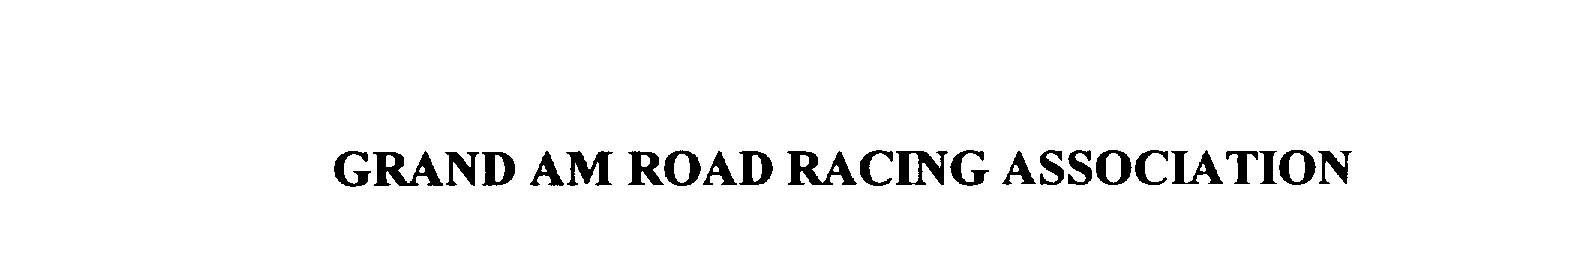  GRAND AM ROAD RACING ASSOCIATION